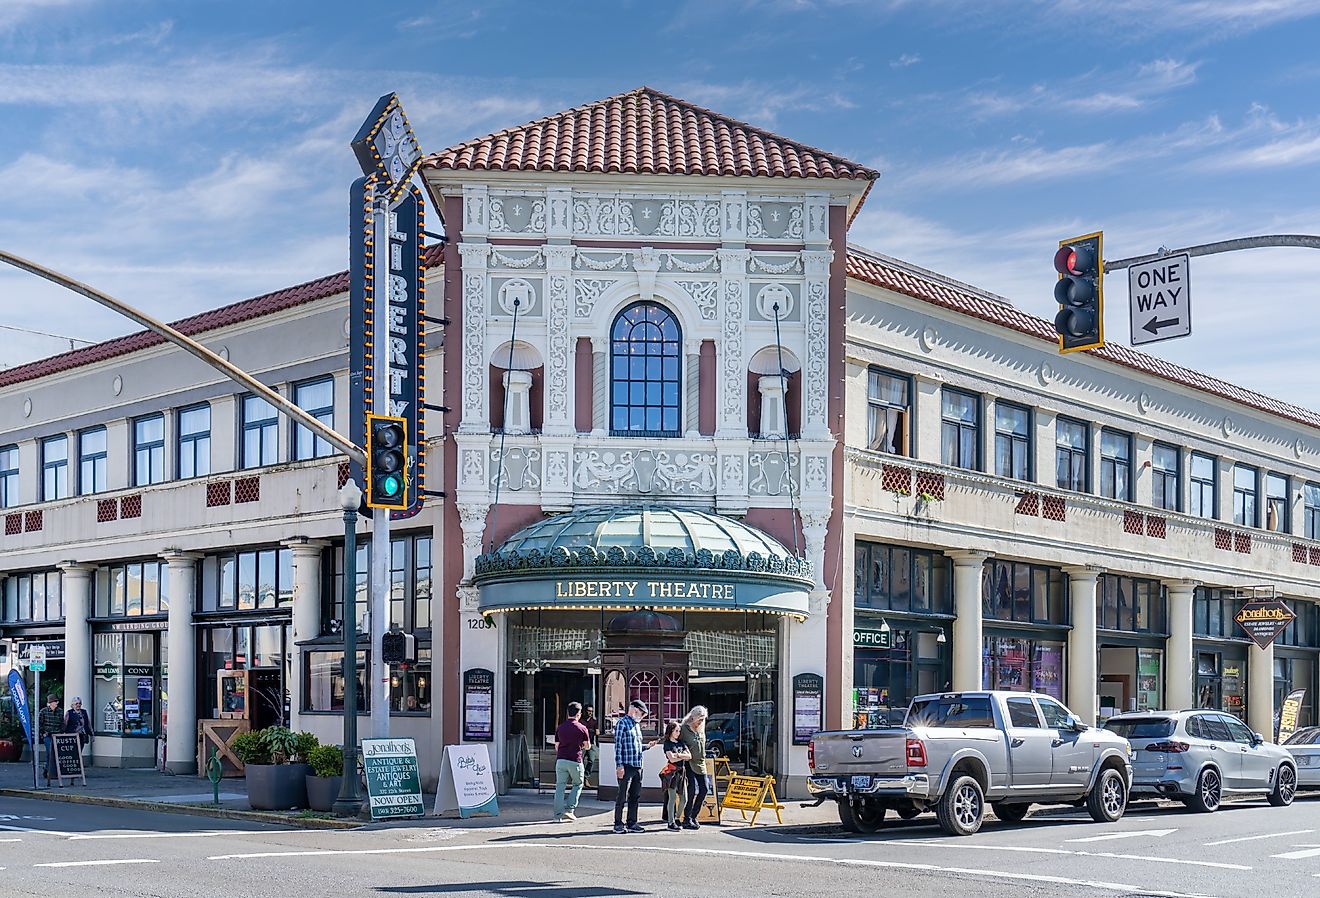 The historic Liberty Theatre in downtown Astoria, Oregon. Image credit BZ Travel via Shutterstock